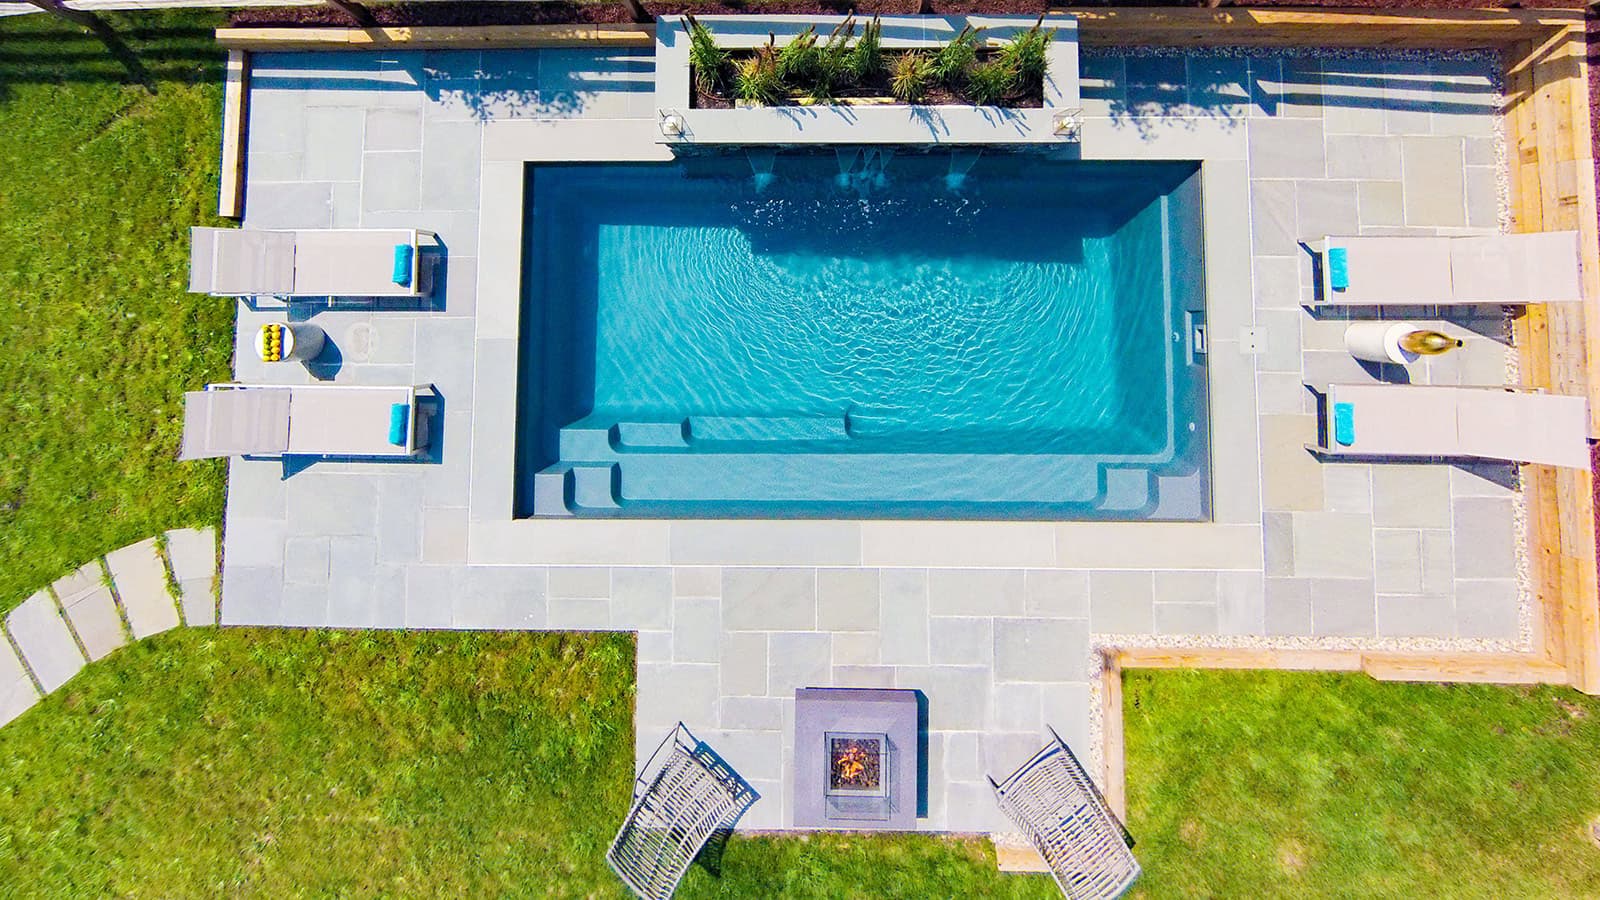 The Imagine Pools Premiere fibreglass swimming pool